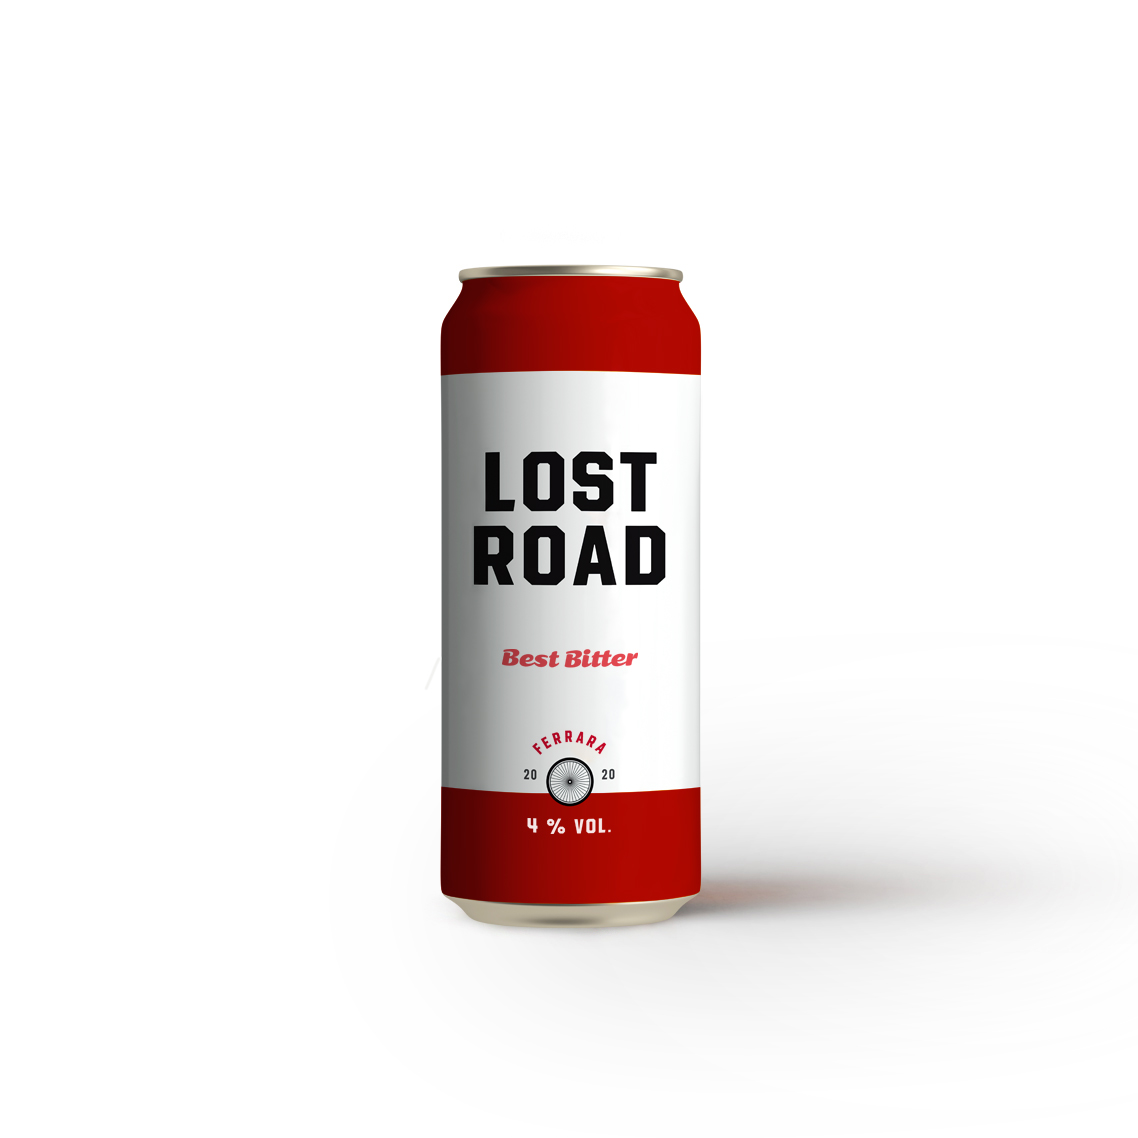 https://www.lostroad.it/wp-content/uploads/2022/02/best-bitter-lost-road-beer.jpg